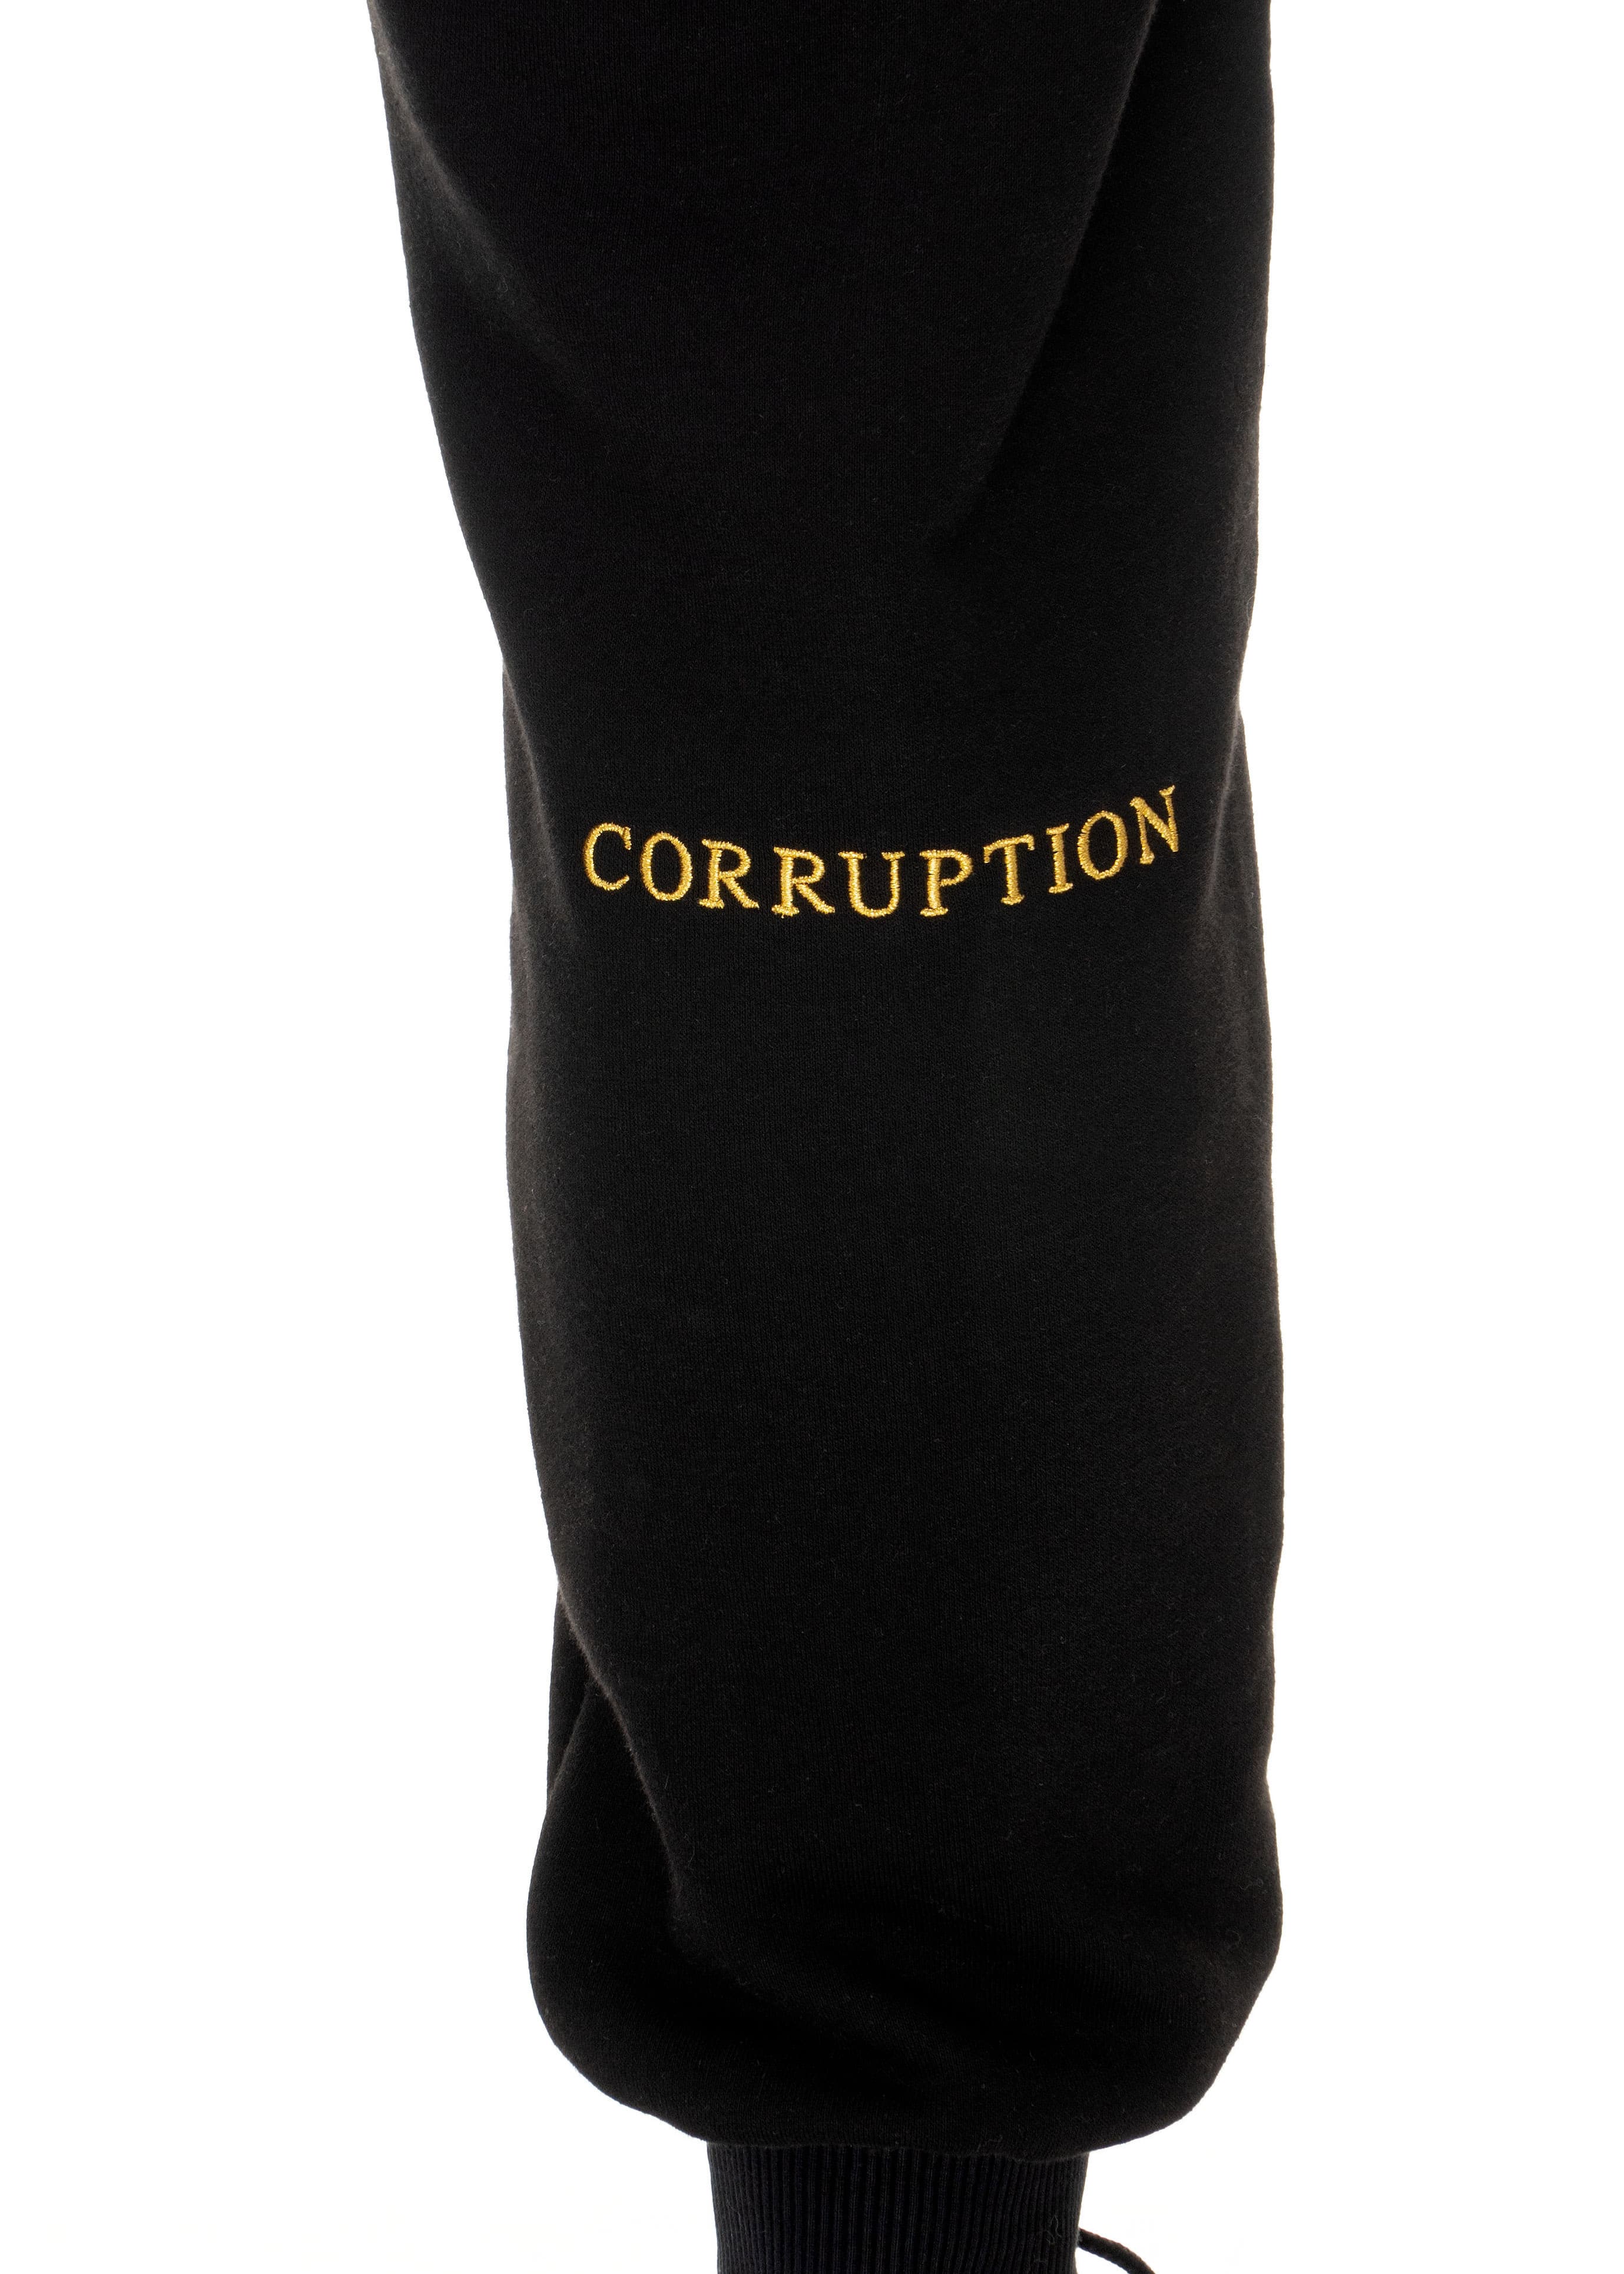 Corruption Trousers image